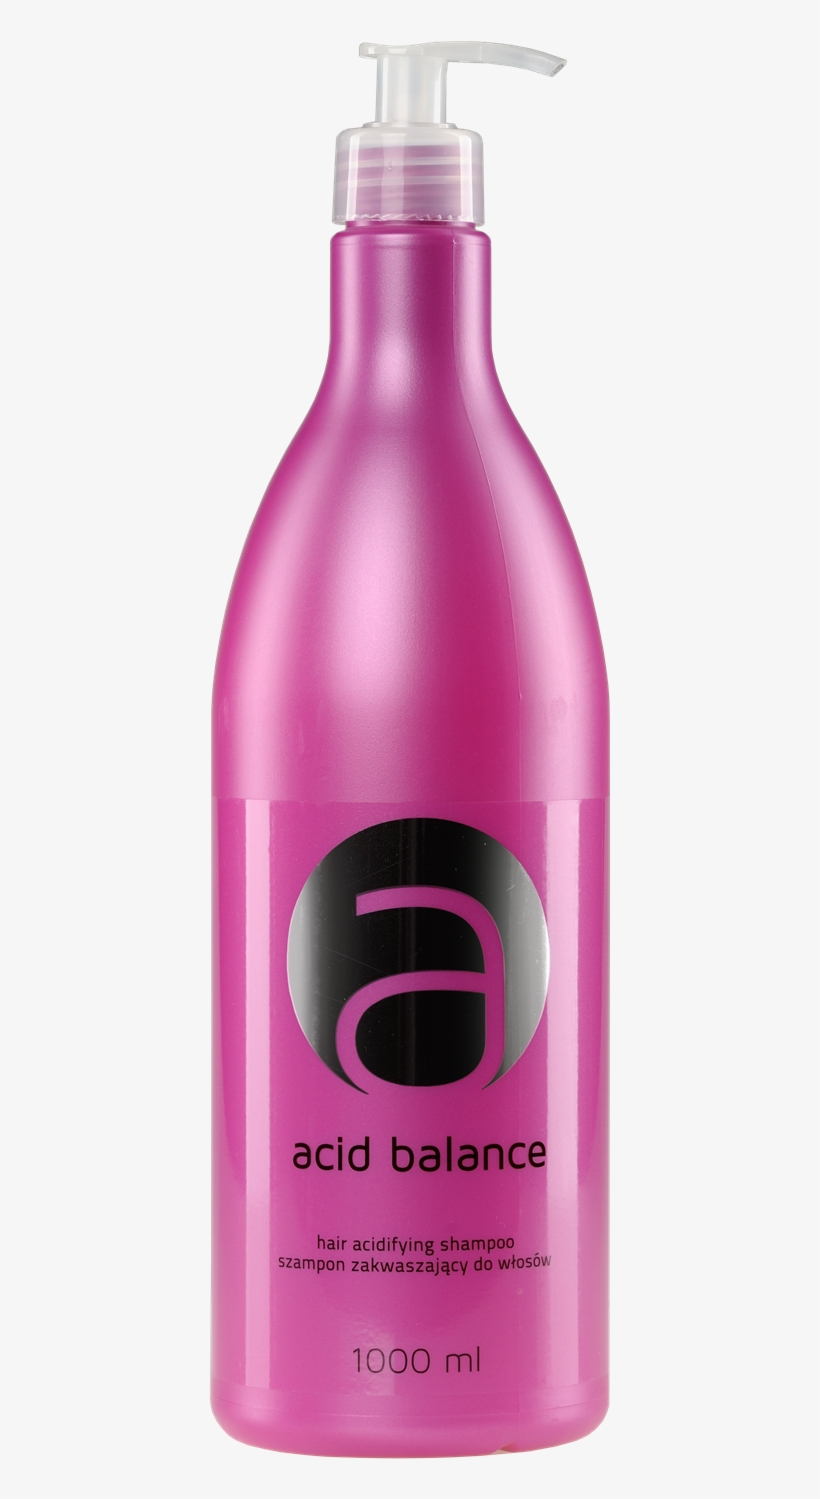 Picture Of Stapiz Acid Balance Hair Shampoo 1000ml - Plastic Bottle, transparent png #8506732